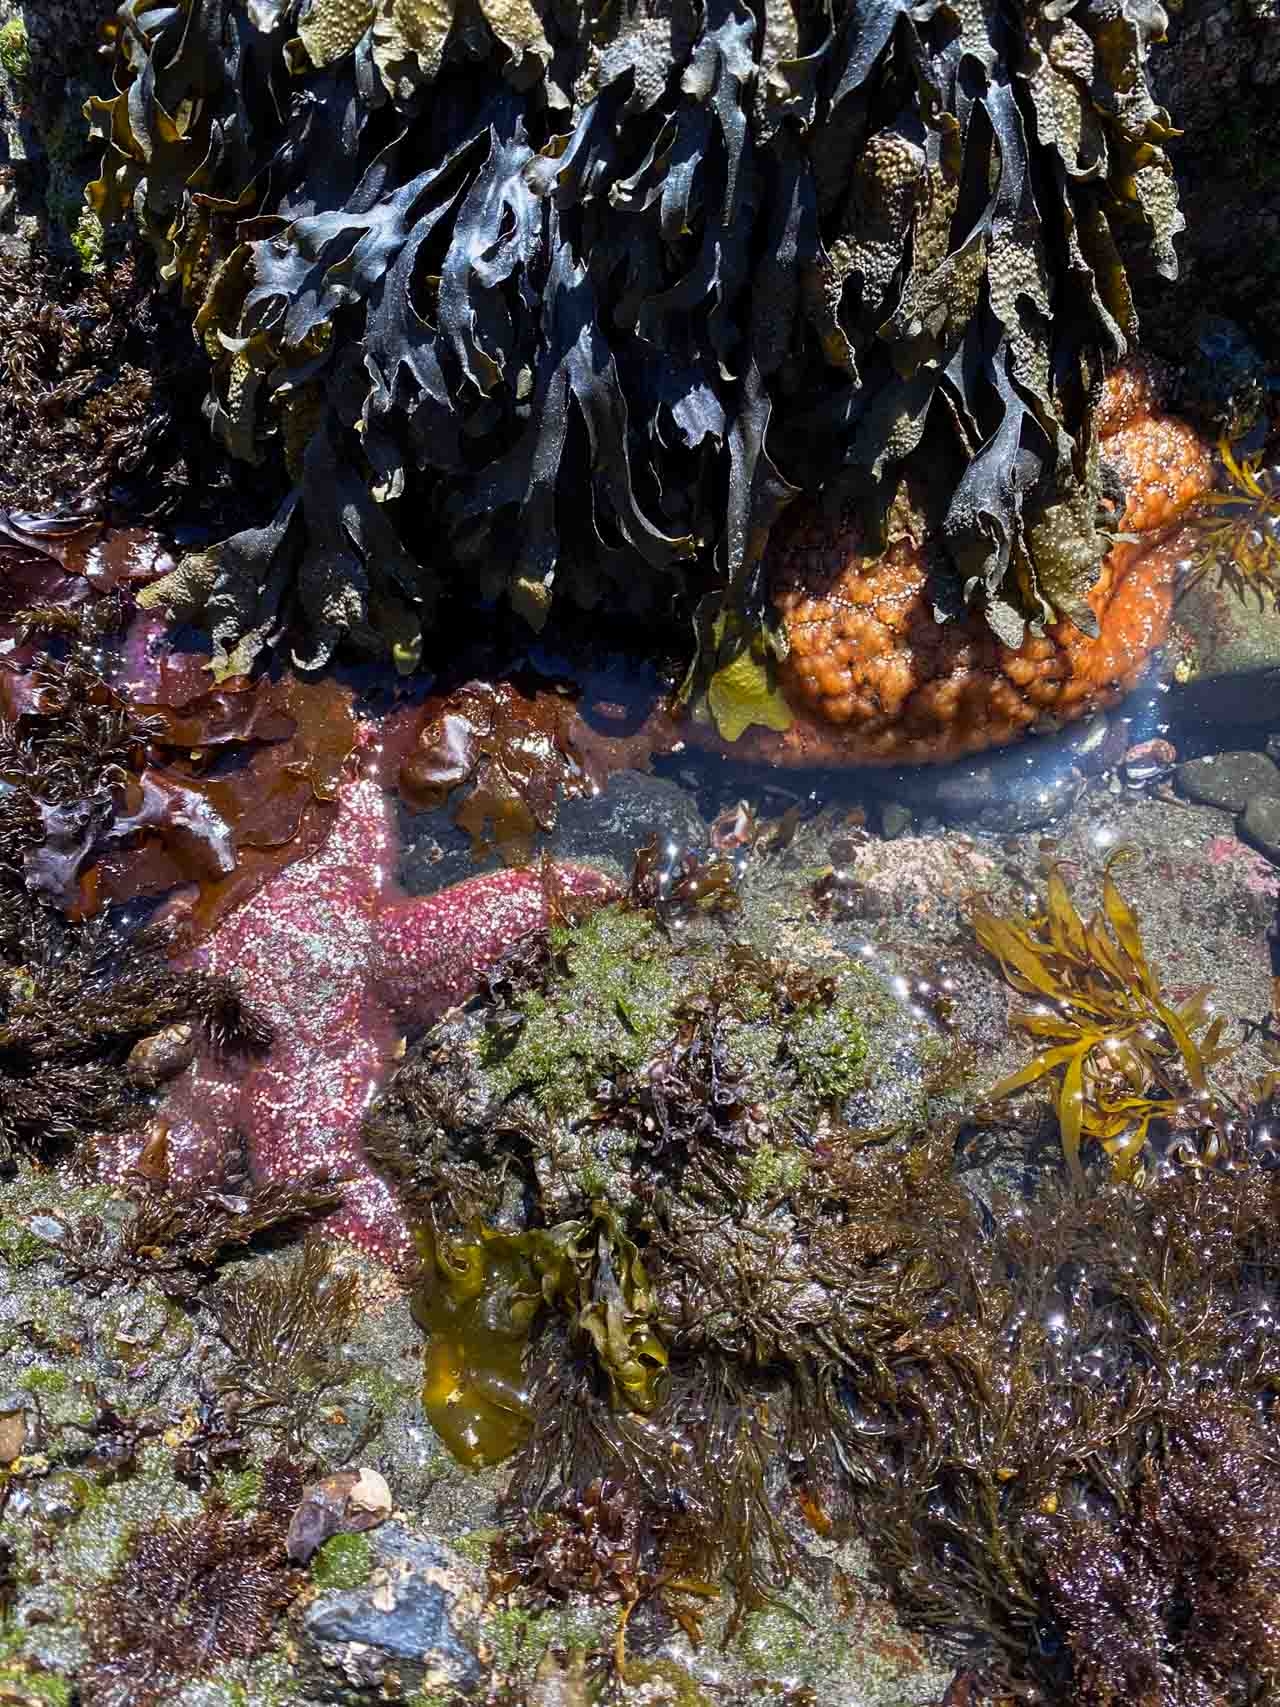 Sea stars at the coast of Redwood National Park, California